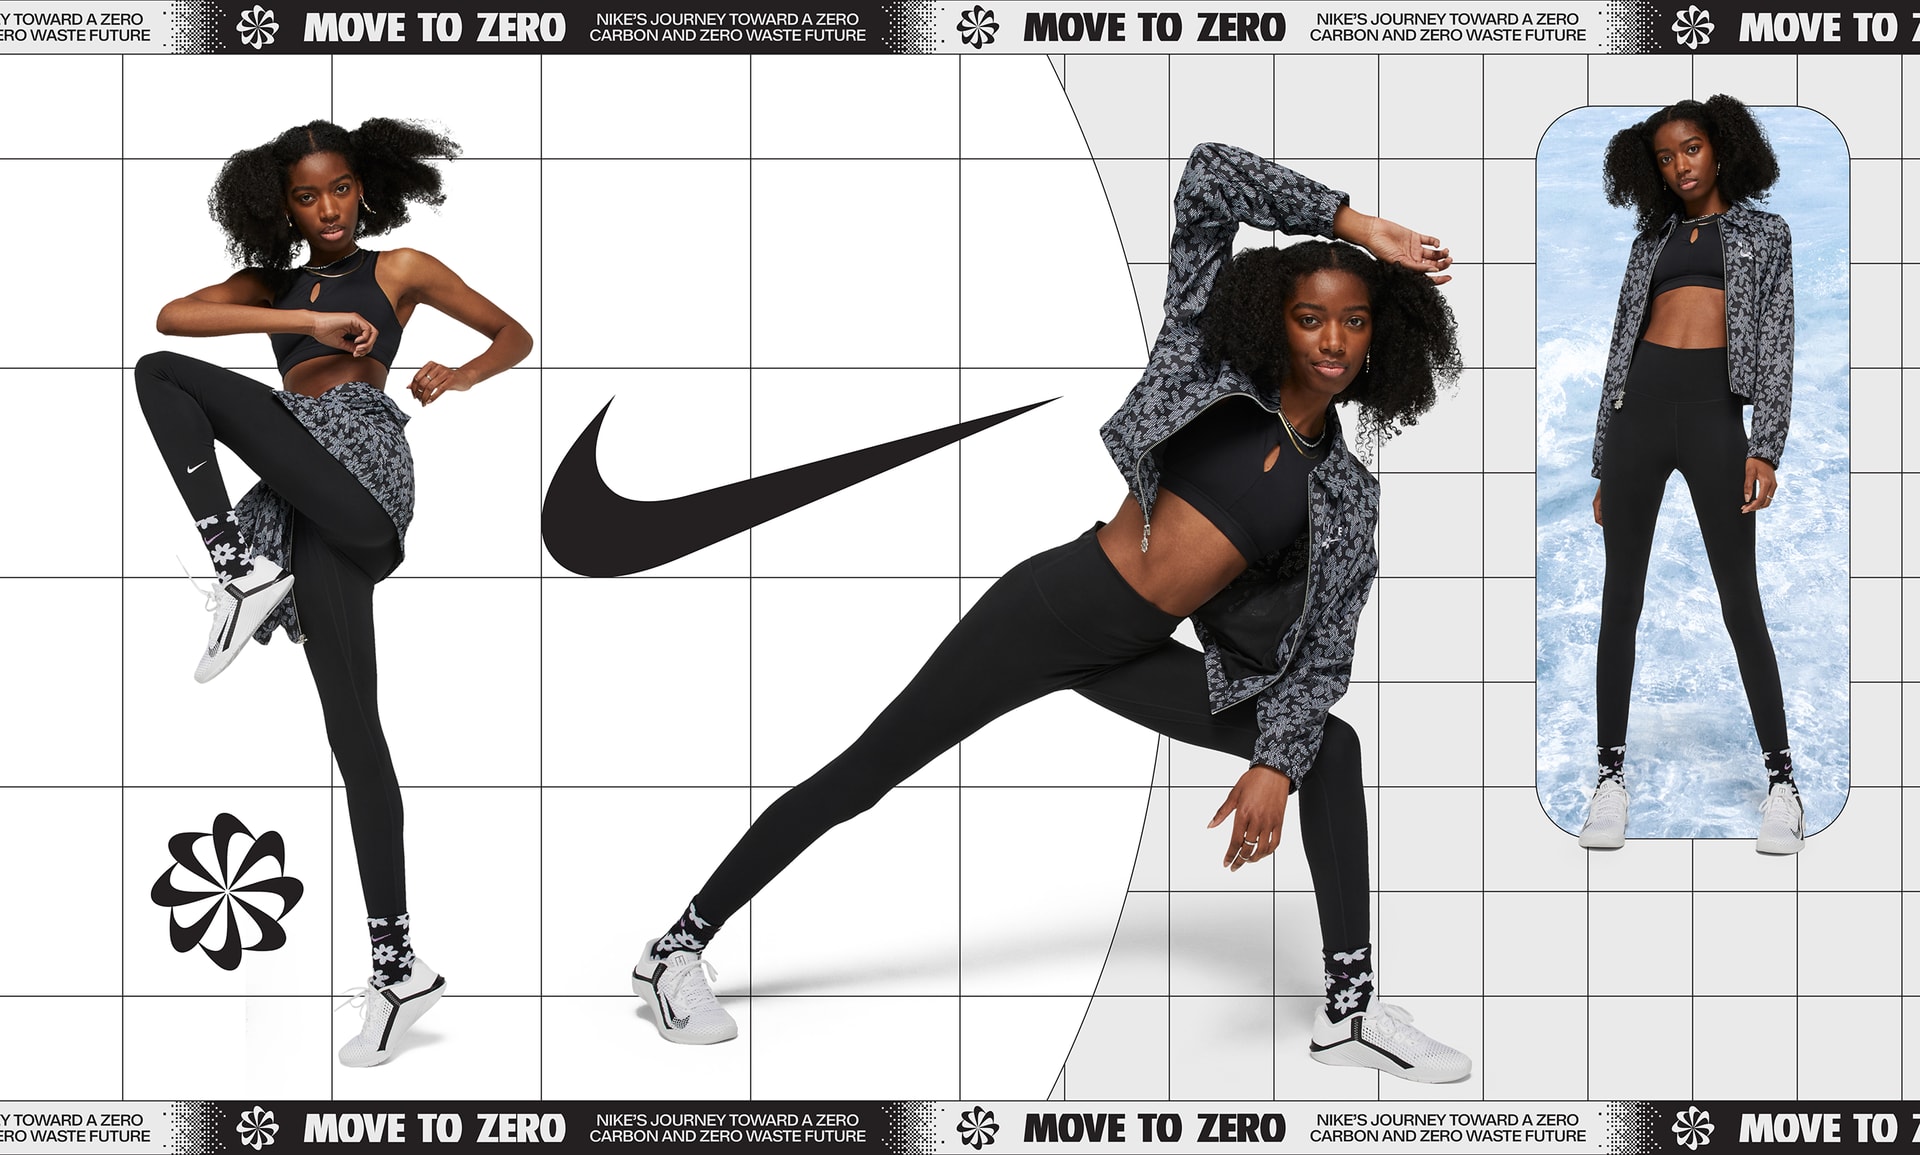 Leggings Nike Dri-FIT One W DM7278-010 – Your Sports Performance